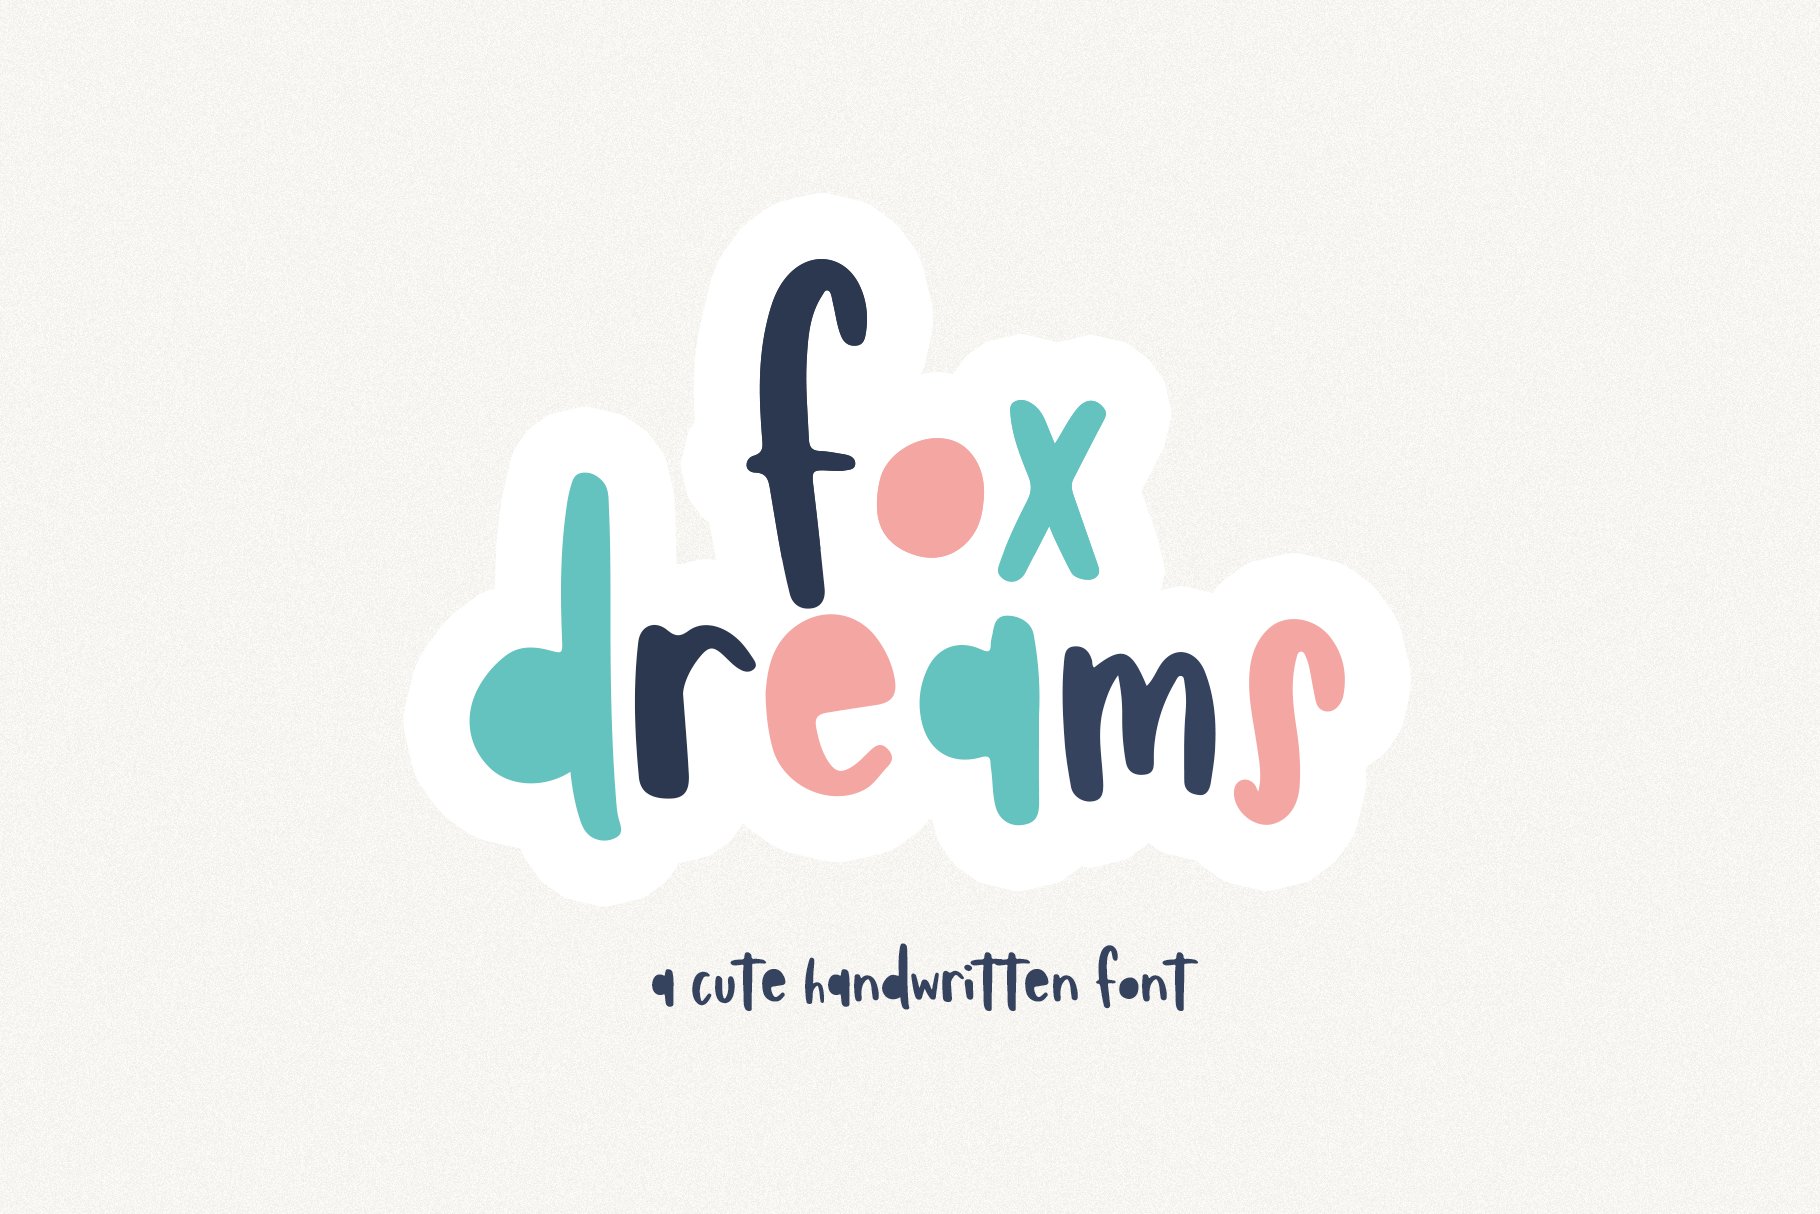 Fox Dreams | Cute Handwritten Font cover image.